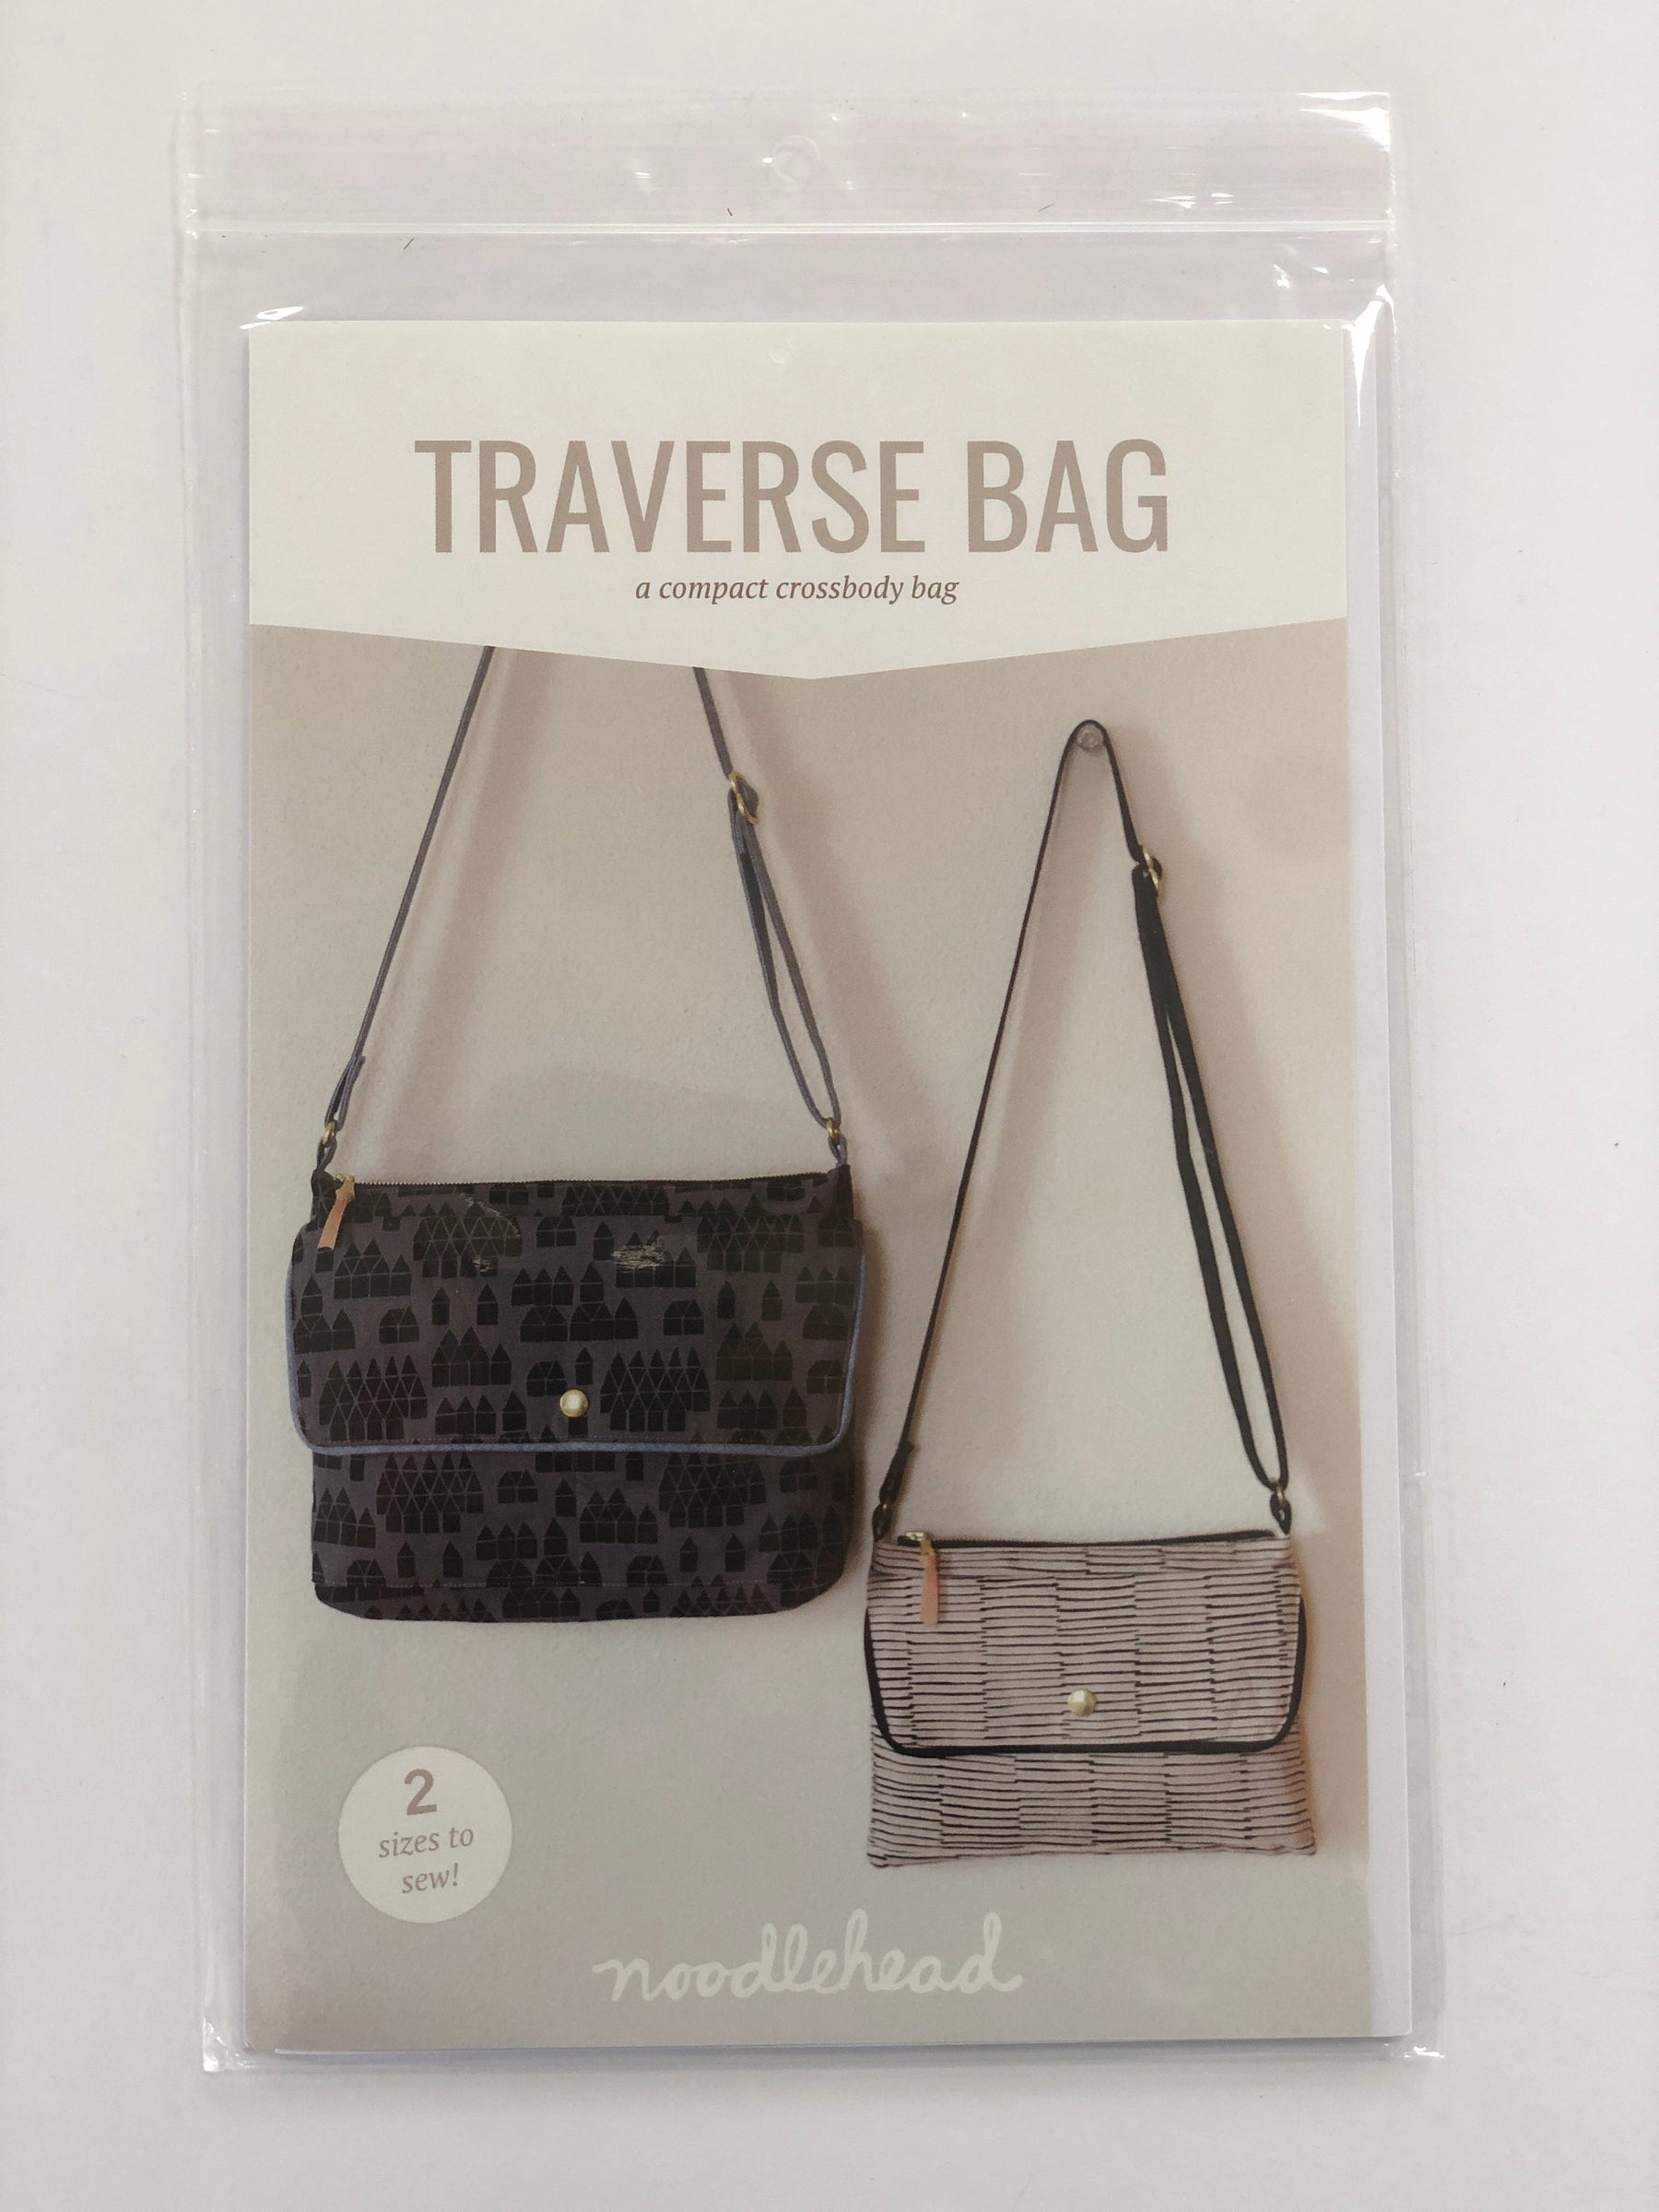 Traverse Bag Making Pattern by Noodlehead